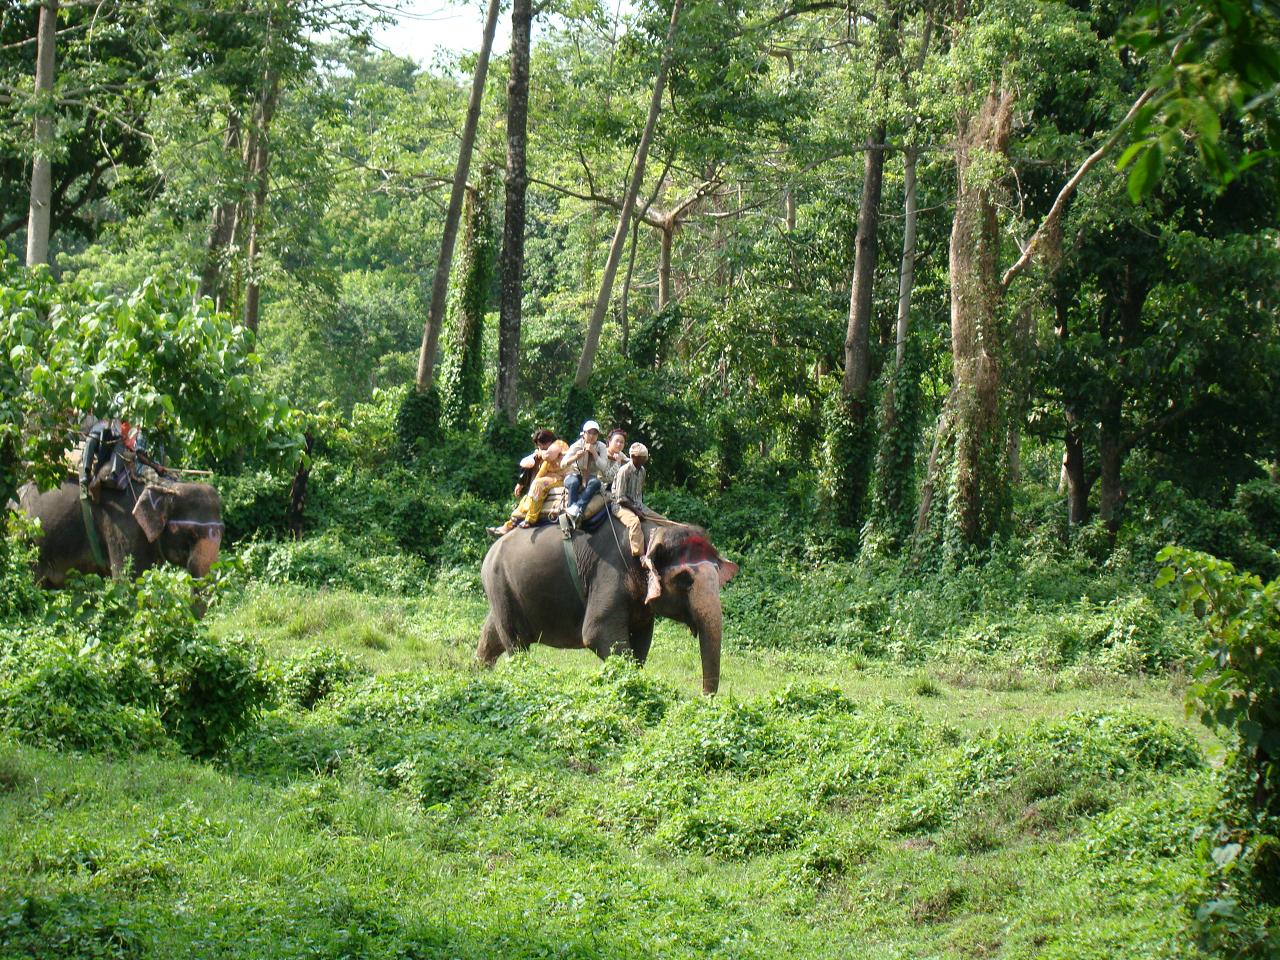 chitwan_elephant_safari019.jpg